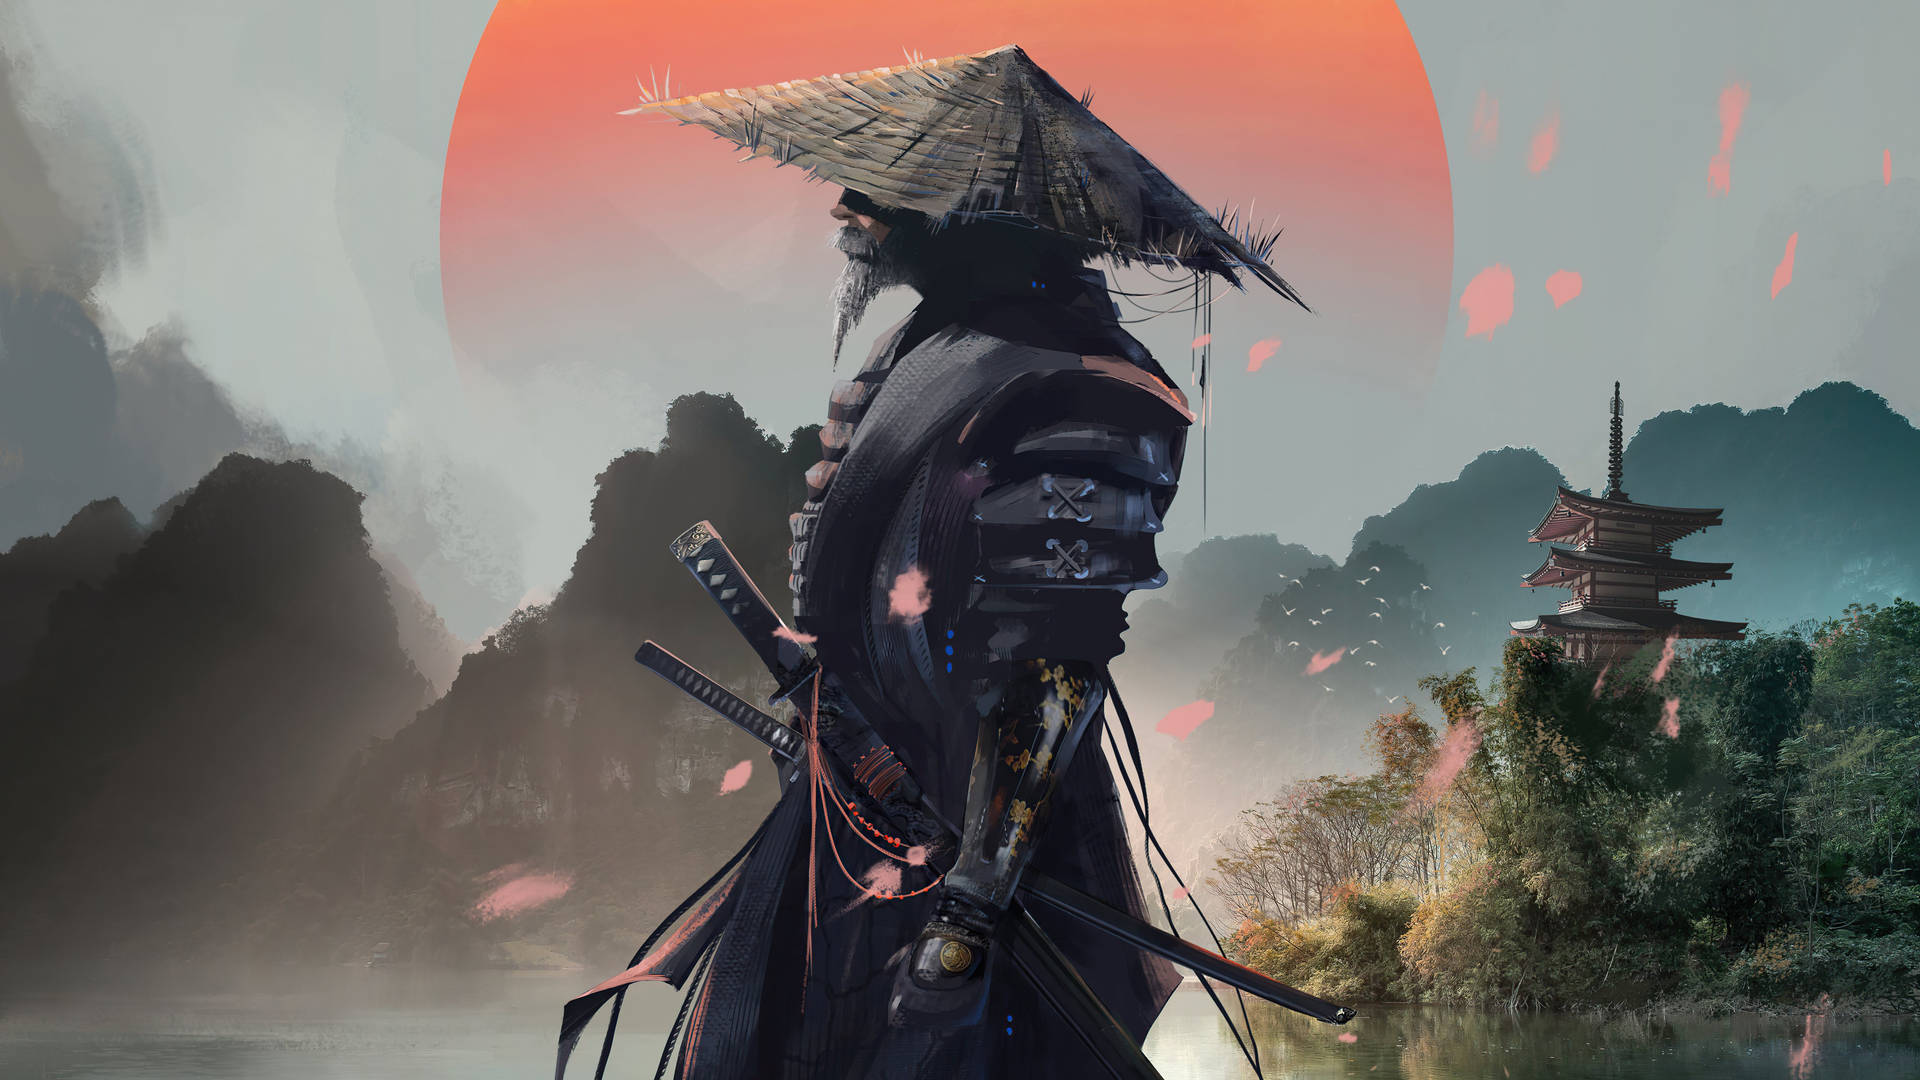 8k Samurai Graphic Art Wallpaper